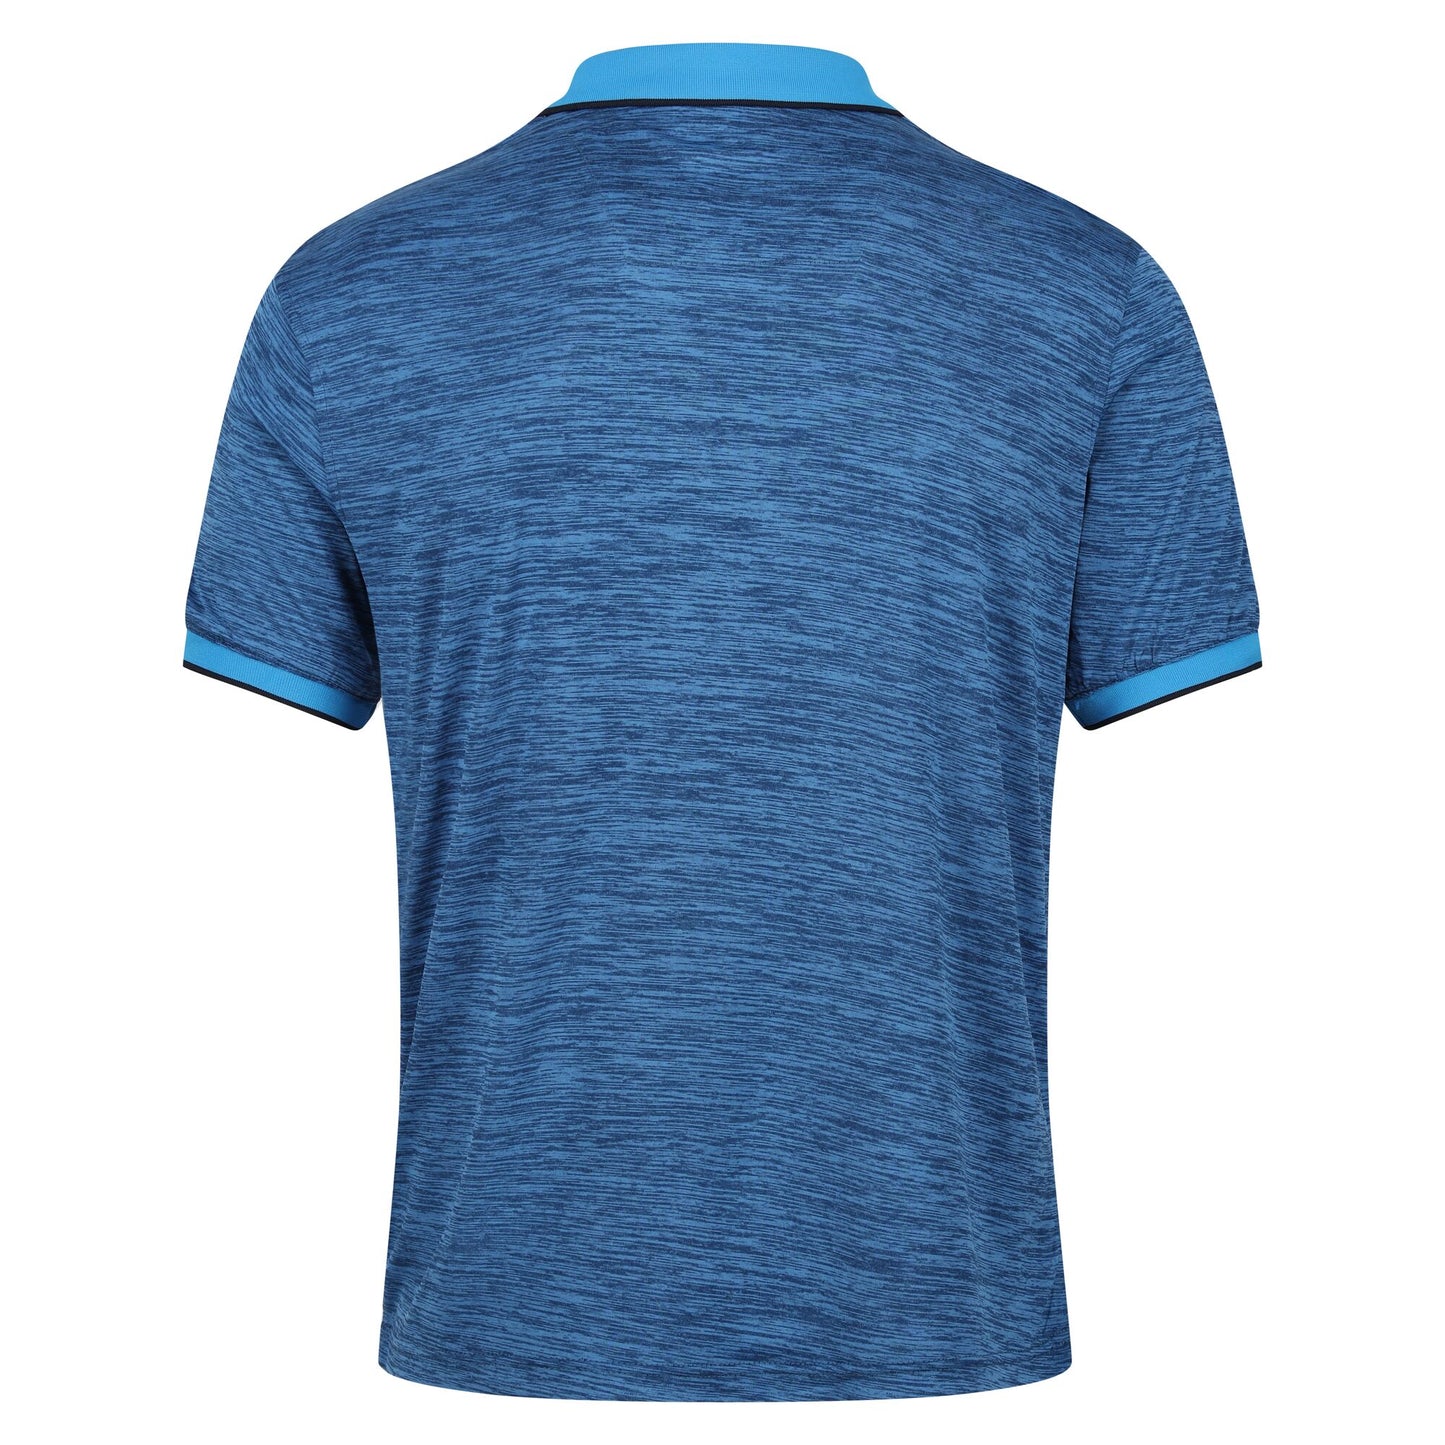 Regatta RMT186 I45 Remex II Indigo Blue Polo Shirt